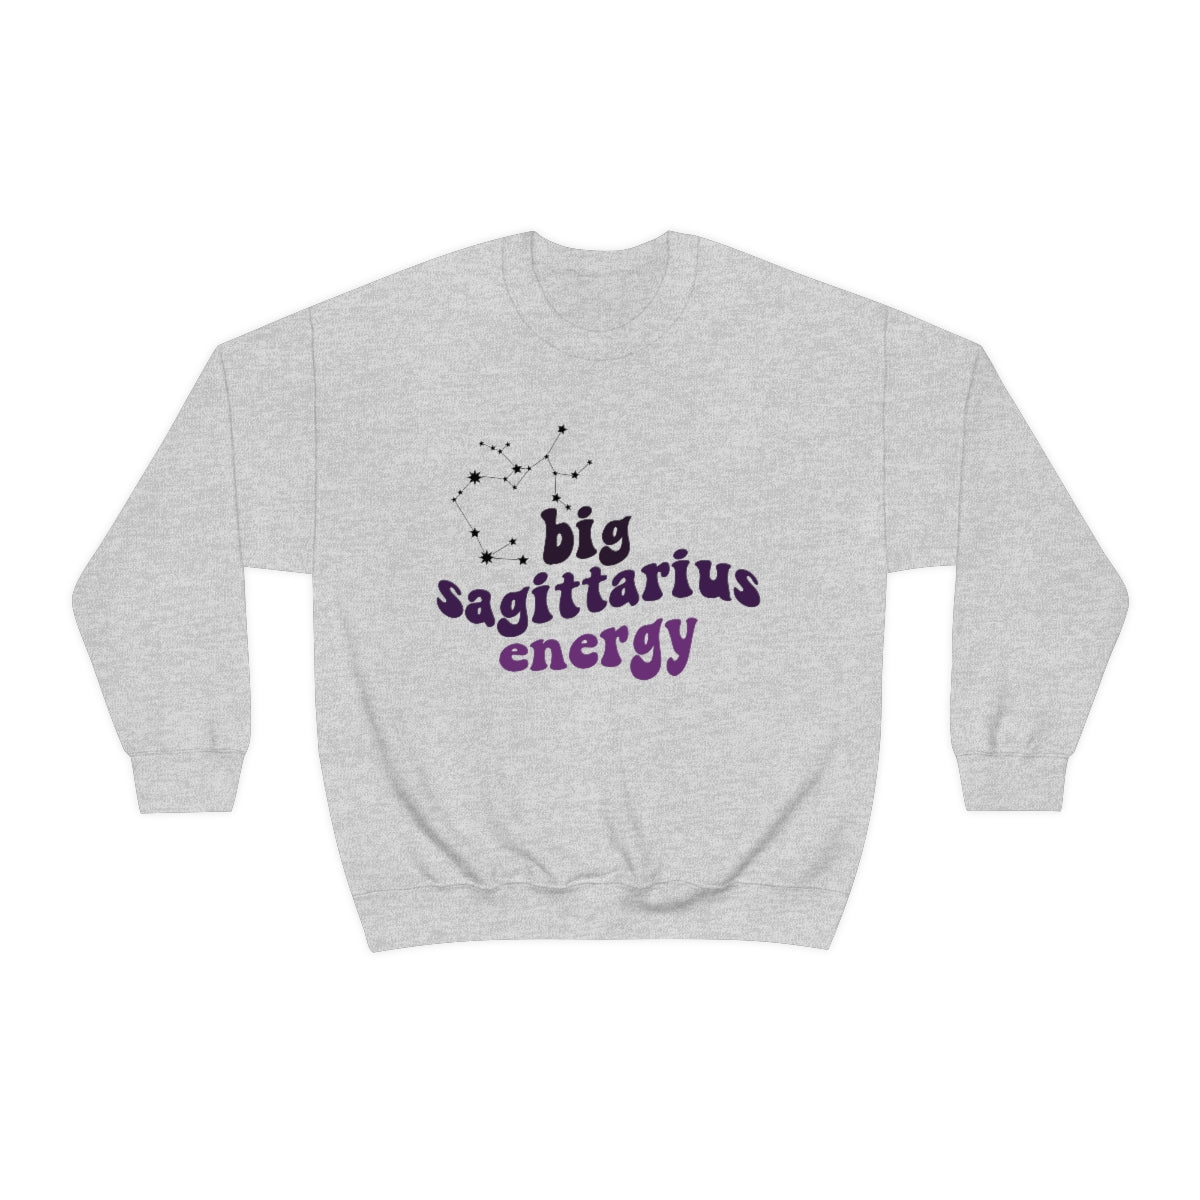 Sagittarius Sweatshirt, Big Sagittarius Energy Sweatshirt, Gift for Sagittarius, Astrology lover sweatshirt, Gift for Astrology Lover